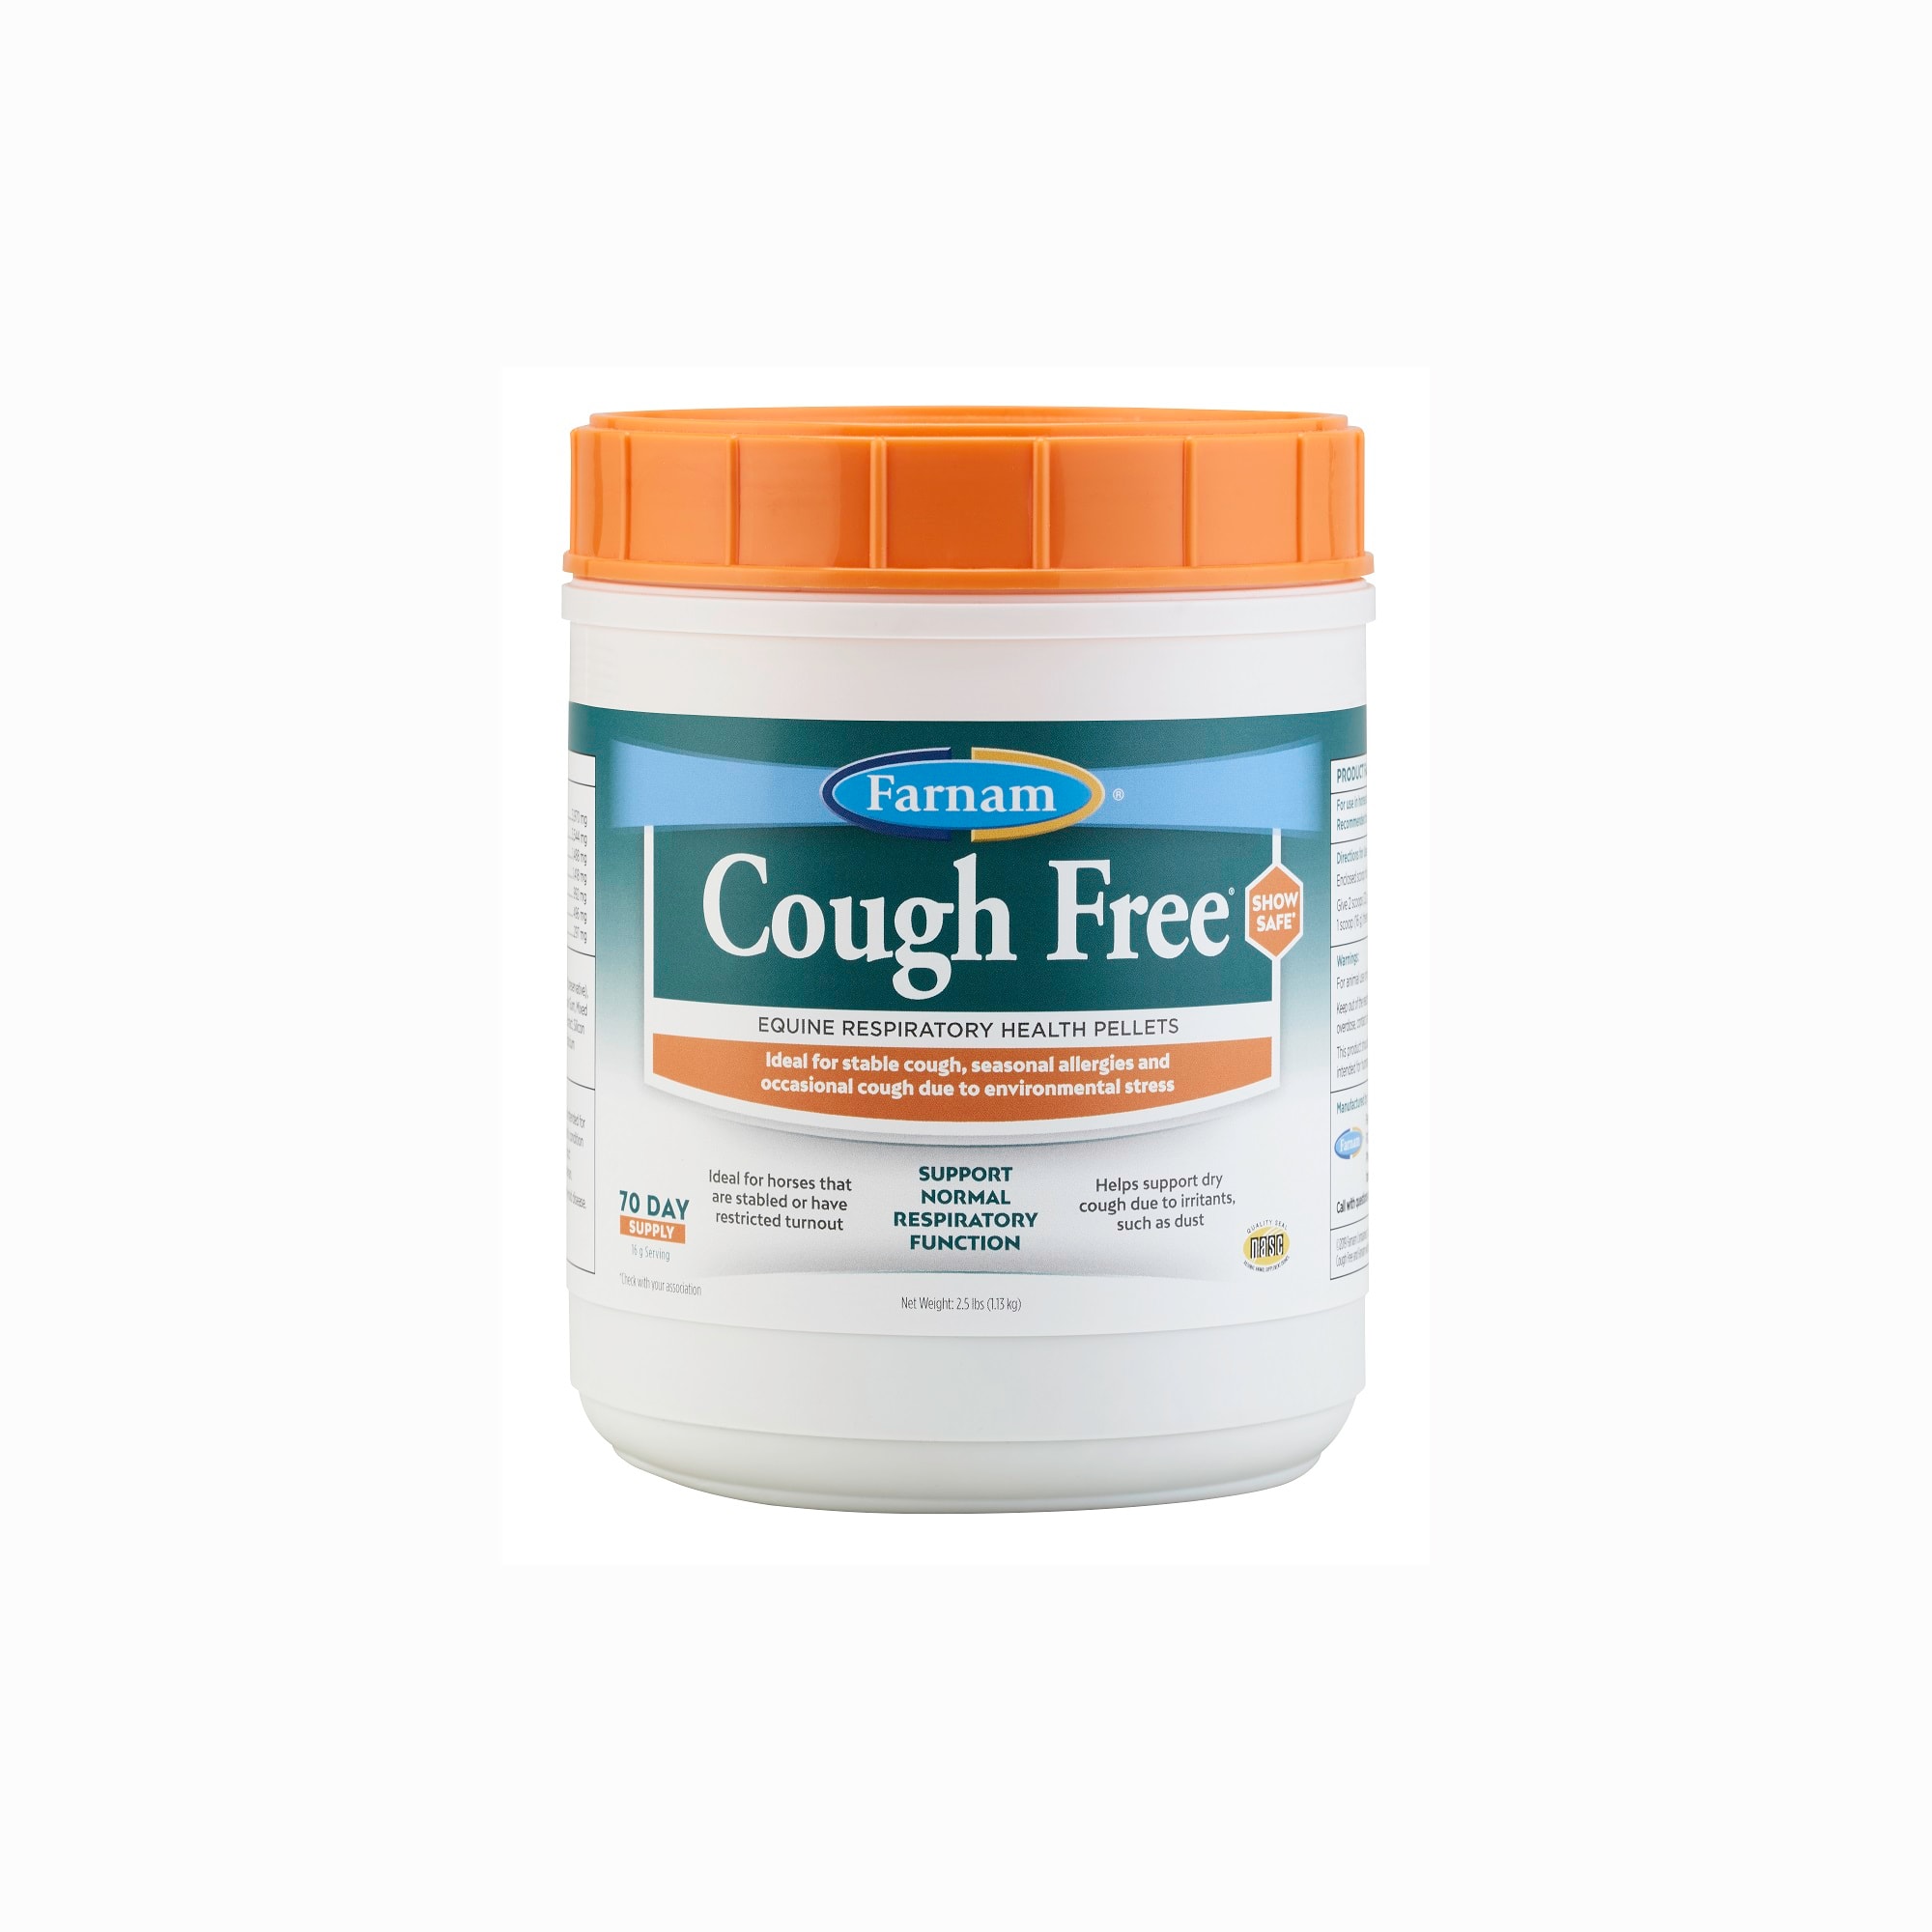 Farnam Cough Free Equine Respiratory Health Pellets, 2.5 lbs.